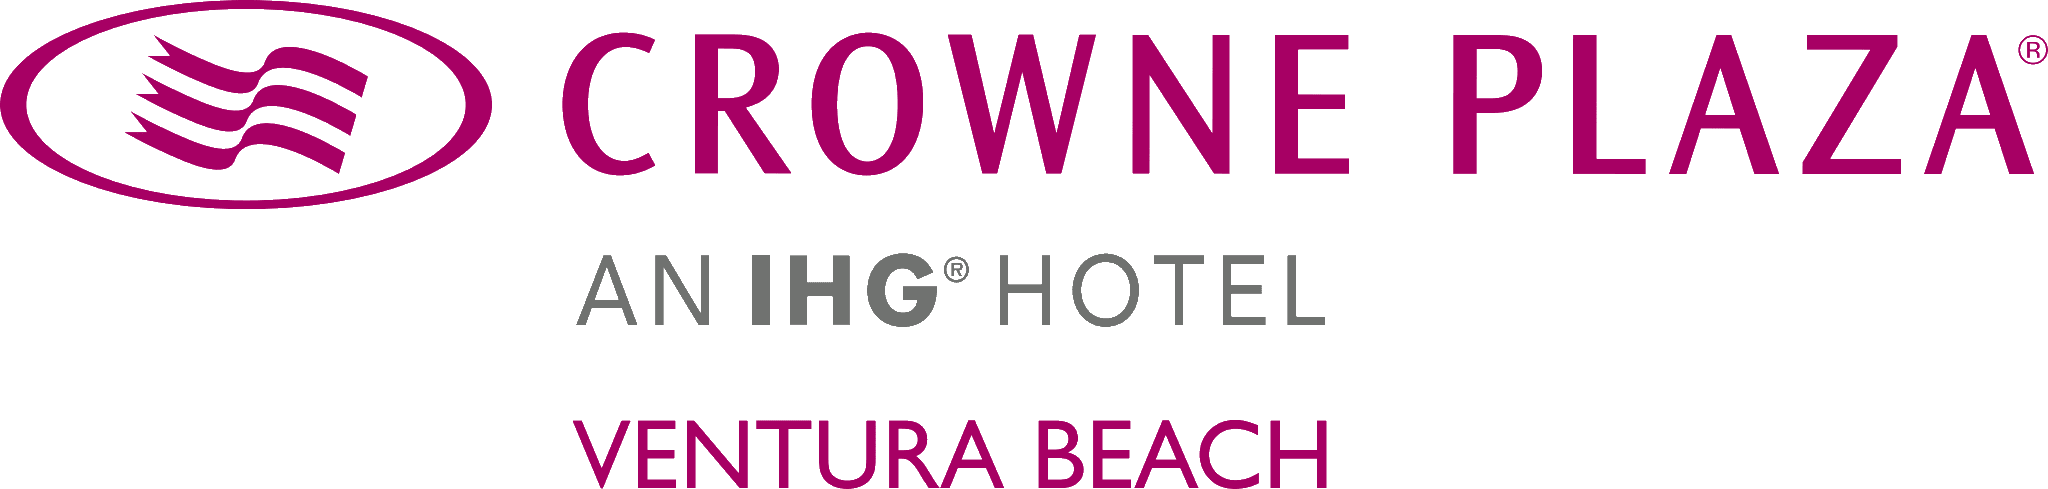 Crowne Plaza Hotel - San Miguel Conference Room logo